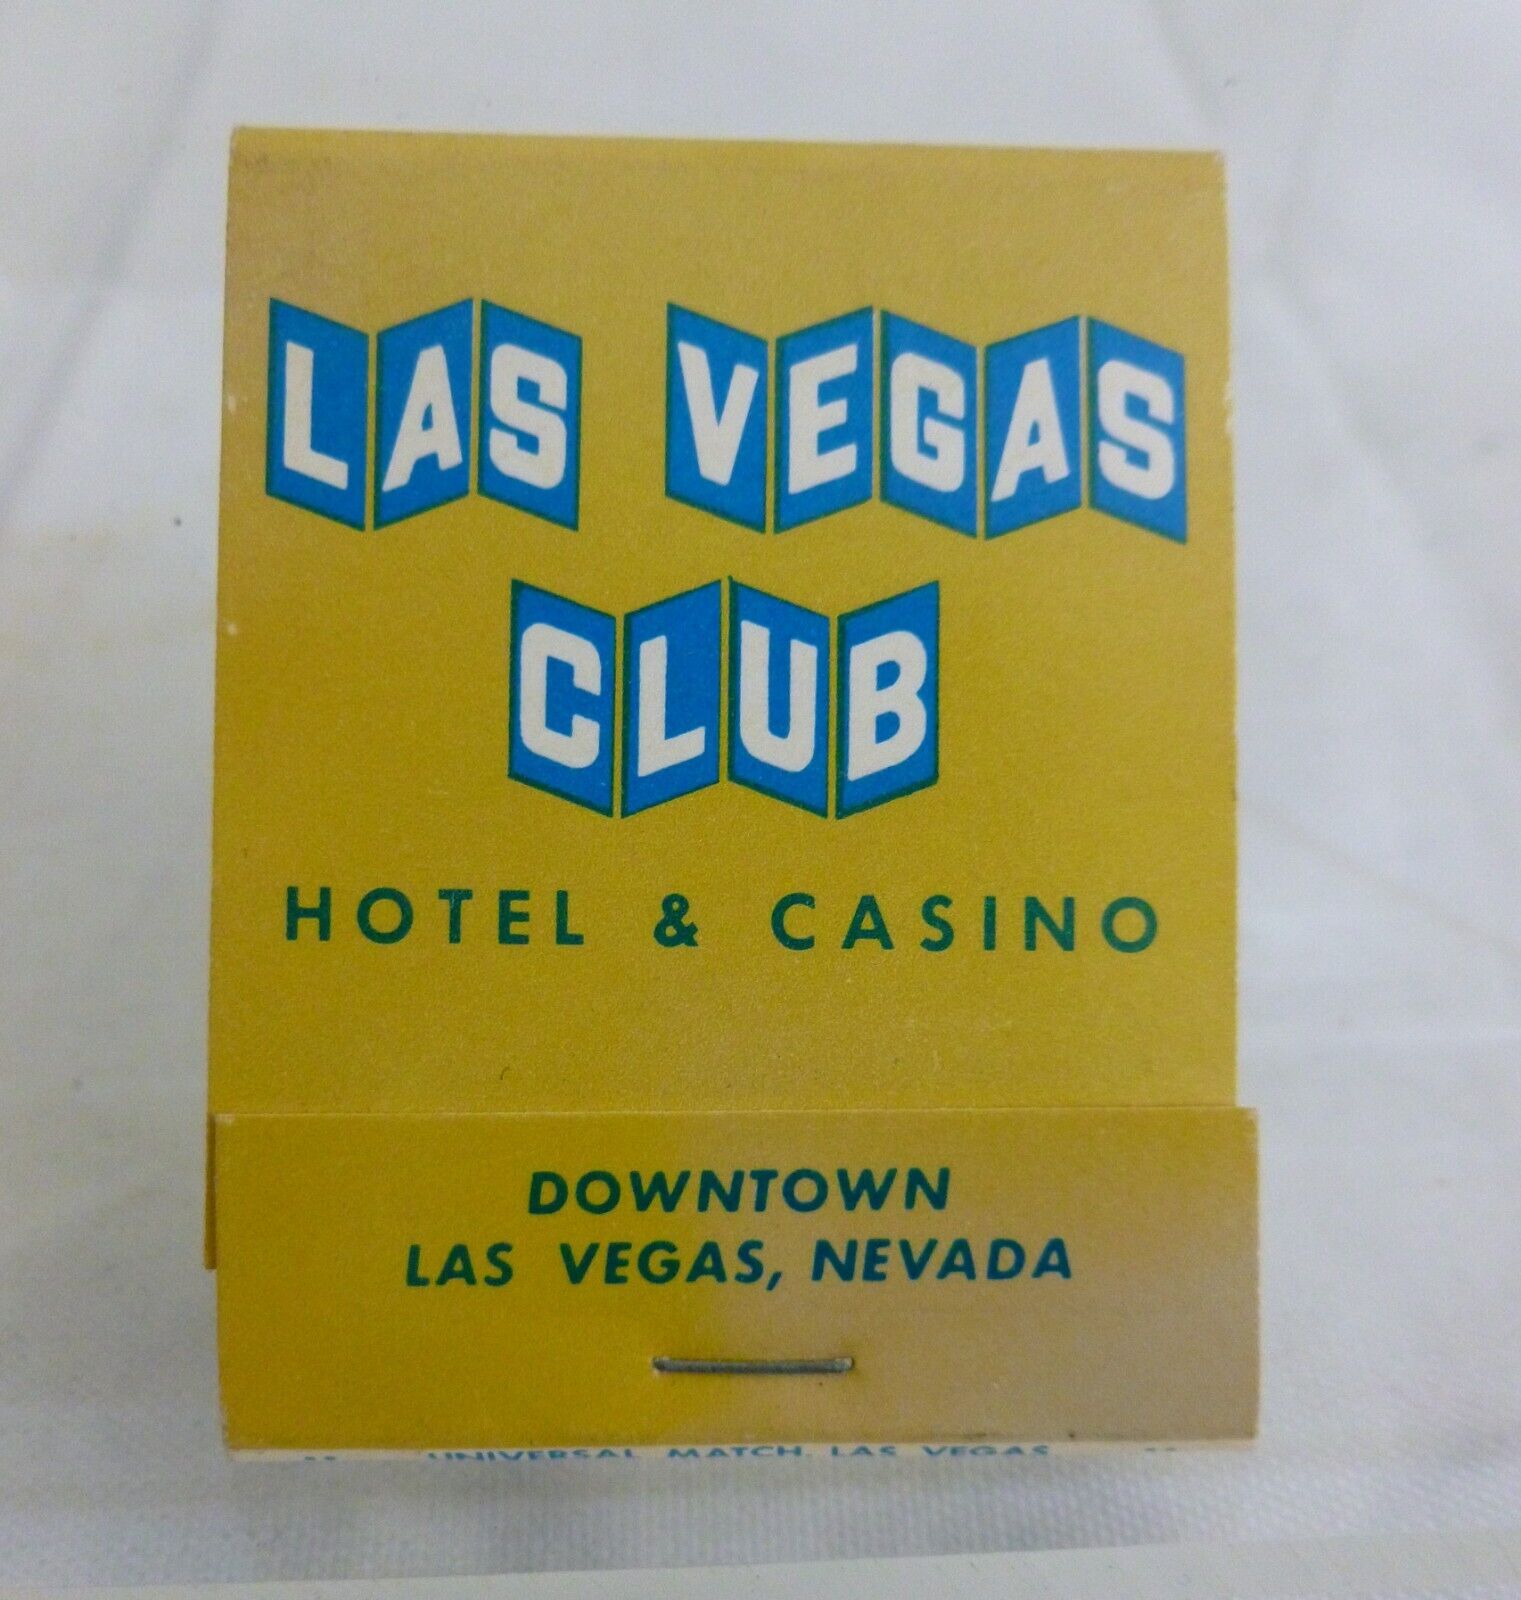 Vintage Matchbook Unstruck - Las Vegas Club Hotel & Casino - Las Vegas Nevada